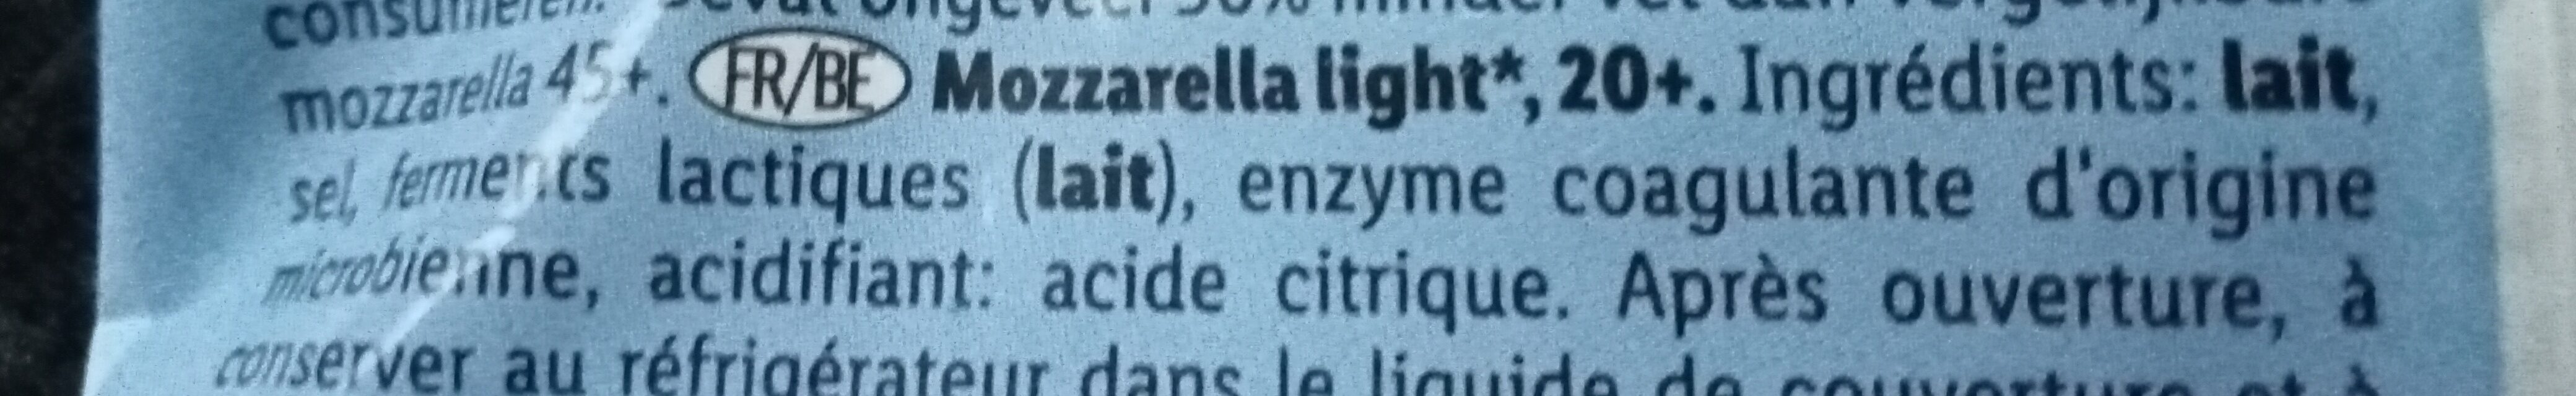 Mozzarella Light - Ingrédients